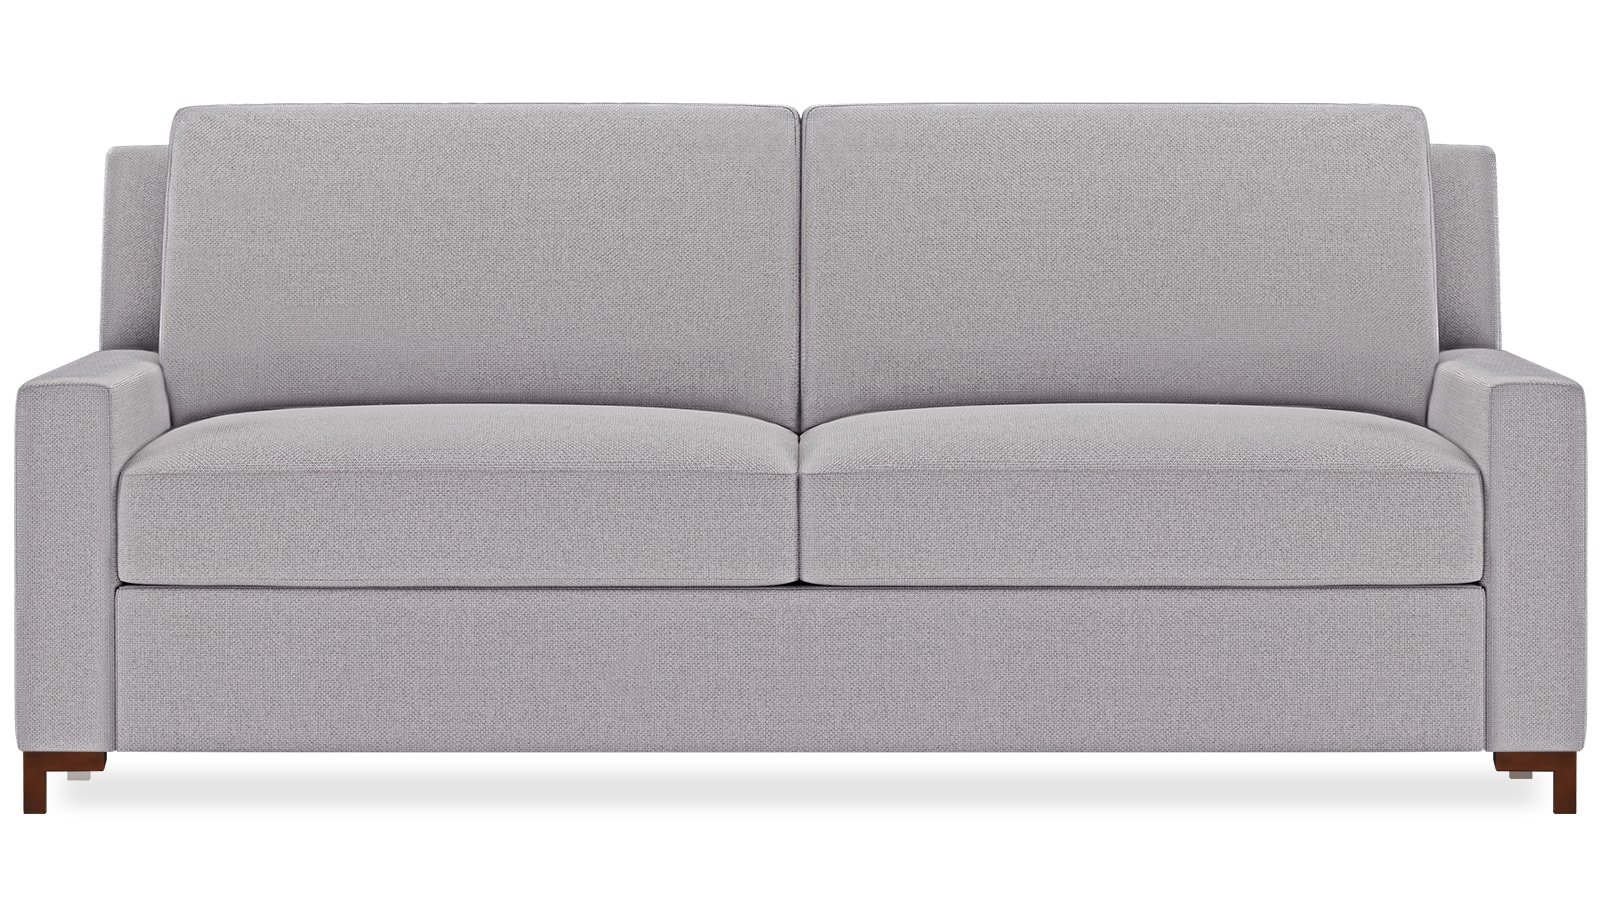 leather sleeper sofa dallas tx